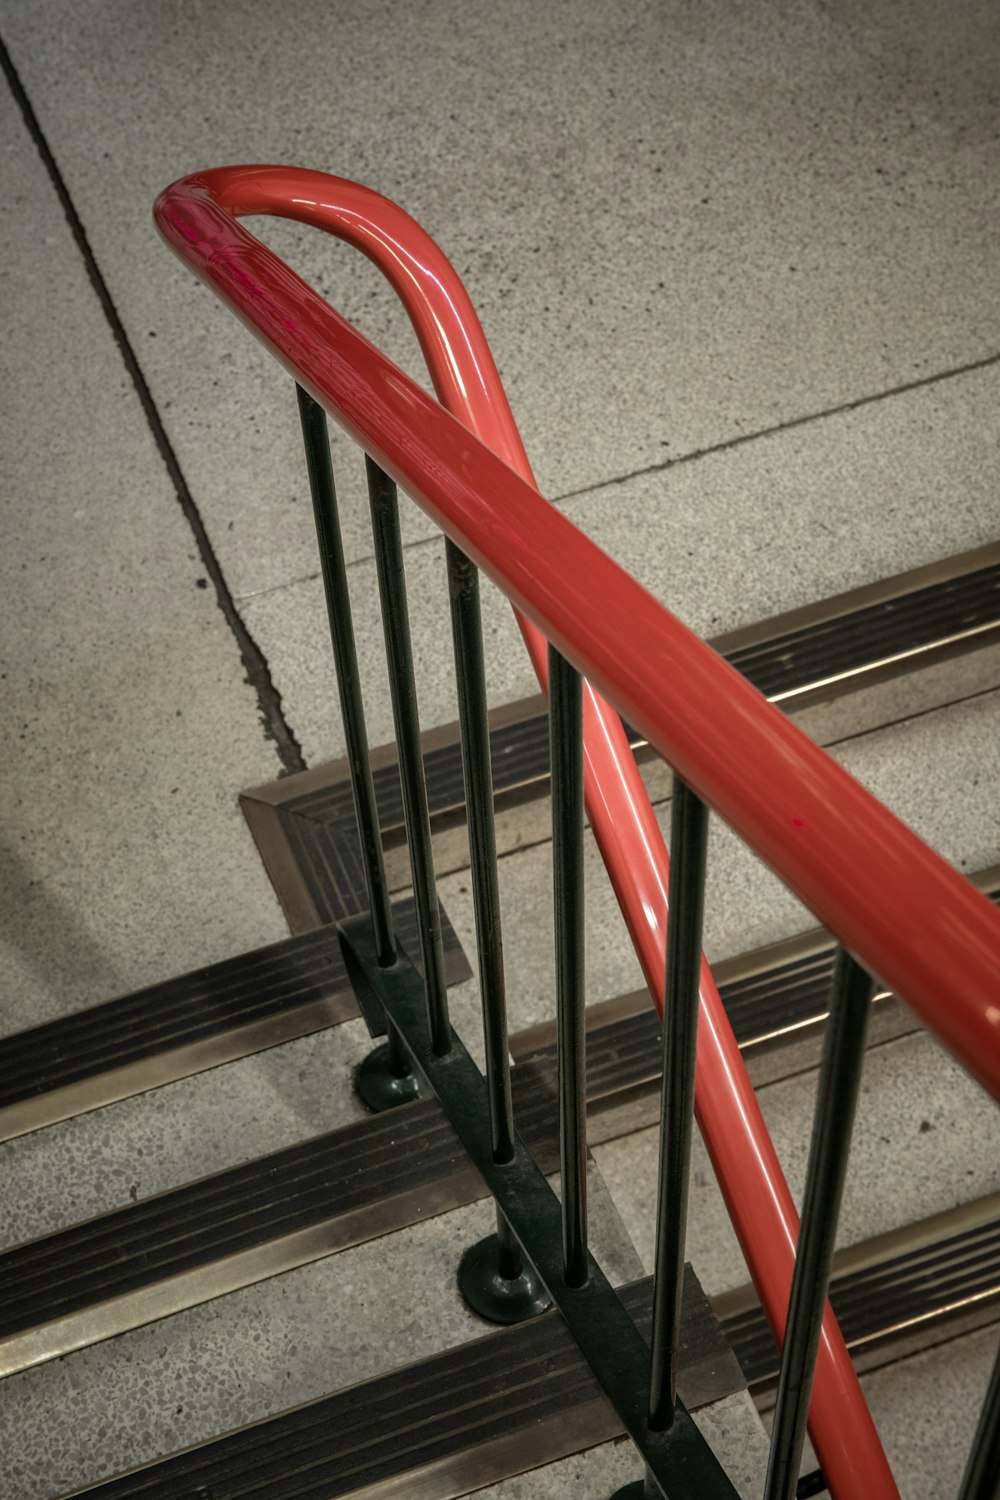 grades de metal vermelho no piso de concreto cinza